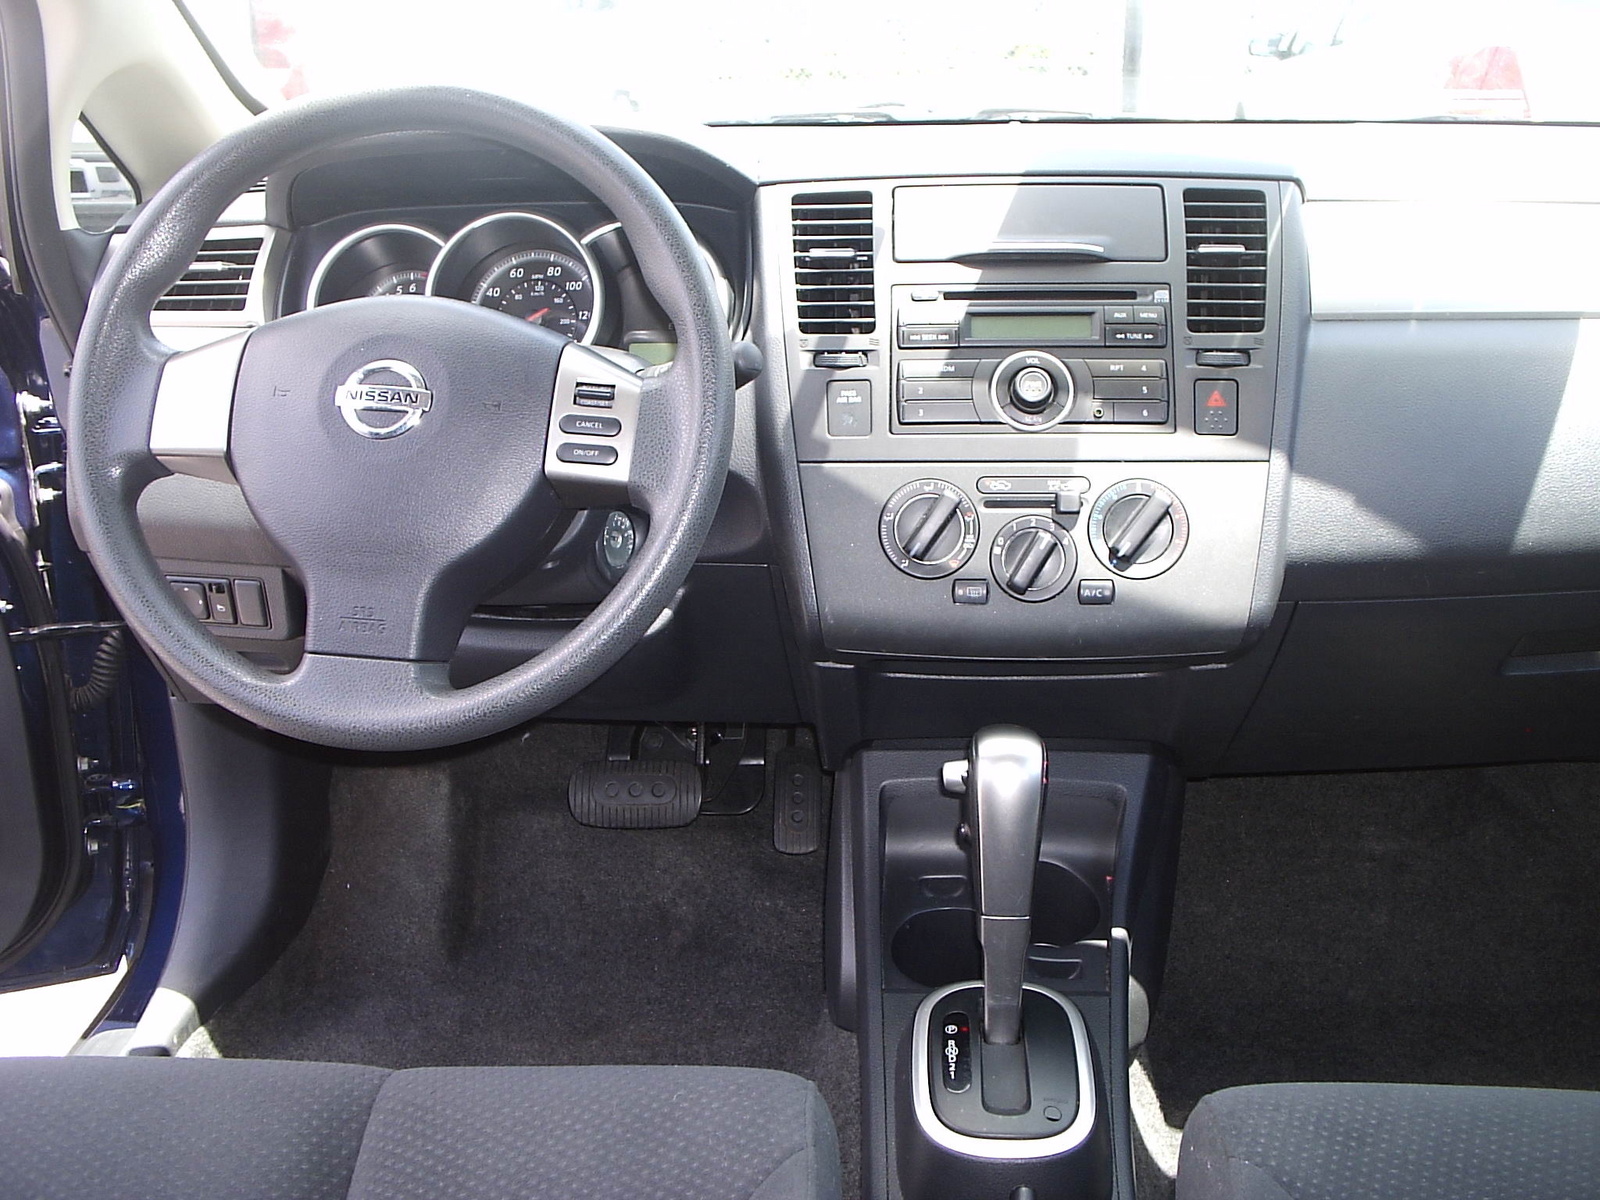 2010 Nissan versa interior dimensions #7